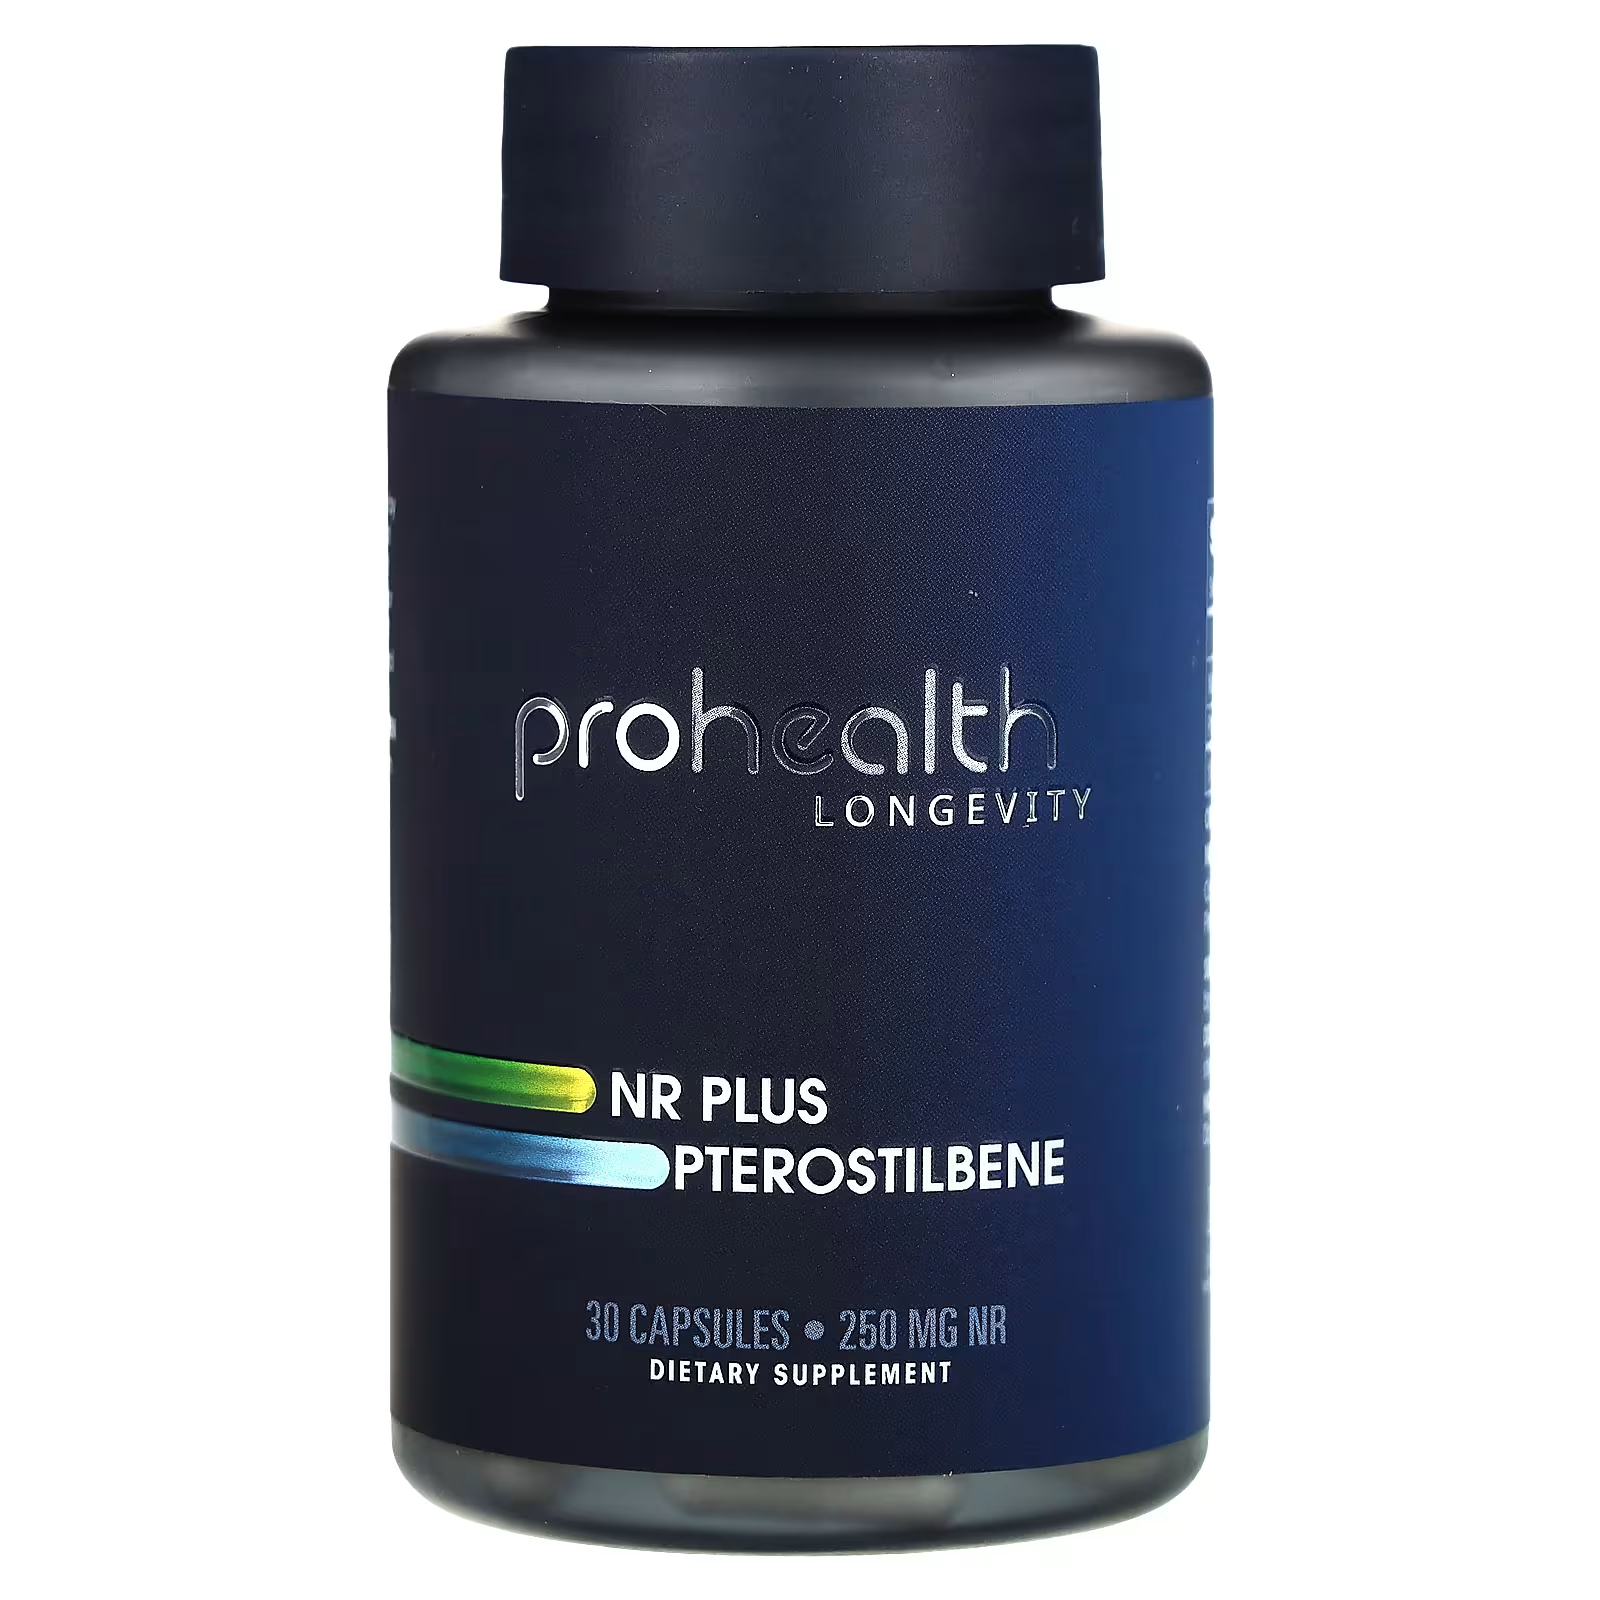 Птеростильбен ProHealth Longevity NR Plus 250 мг, 30 капсул